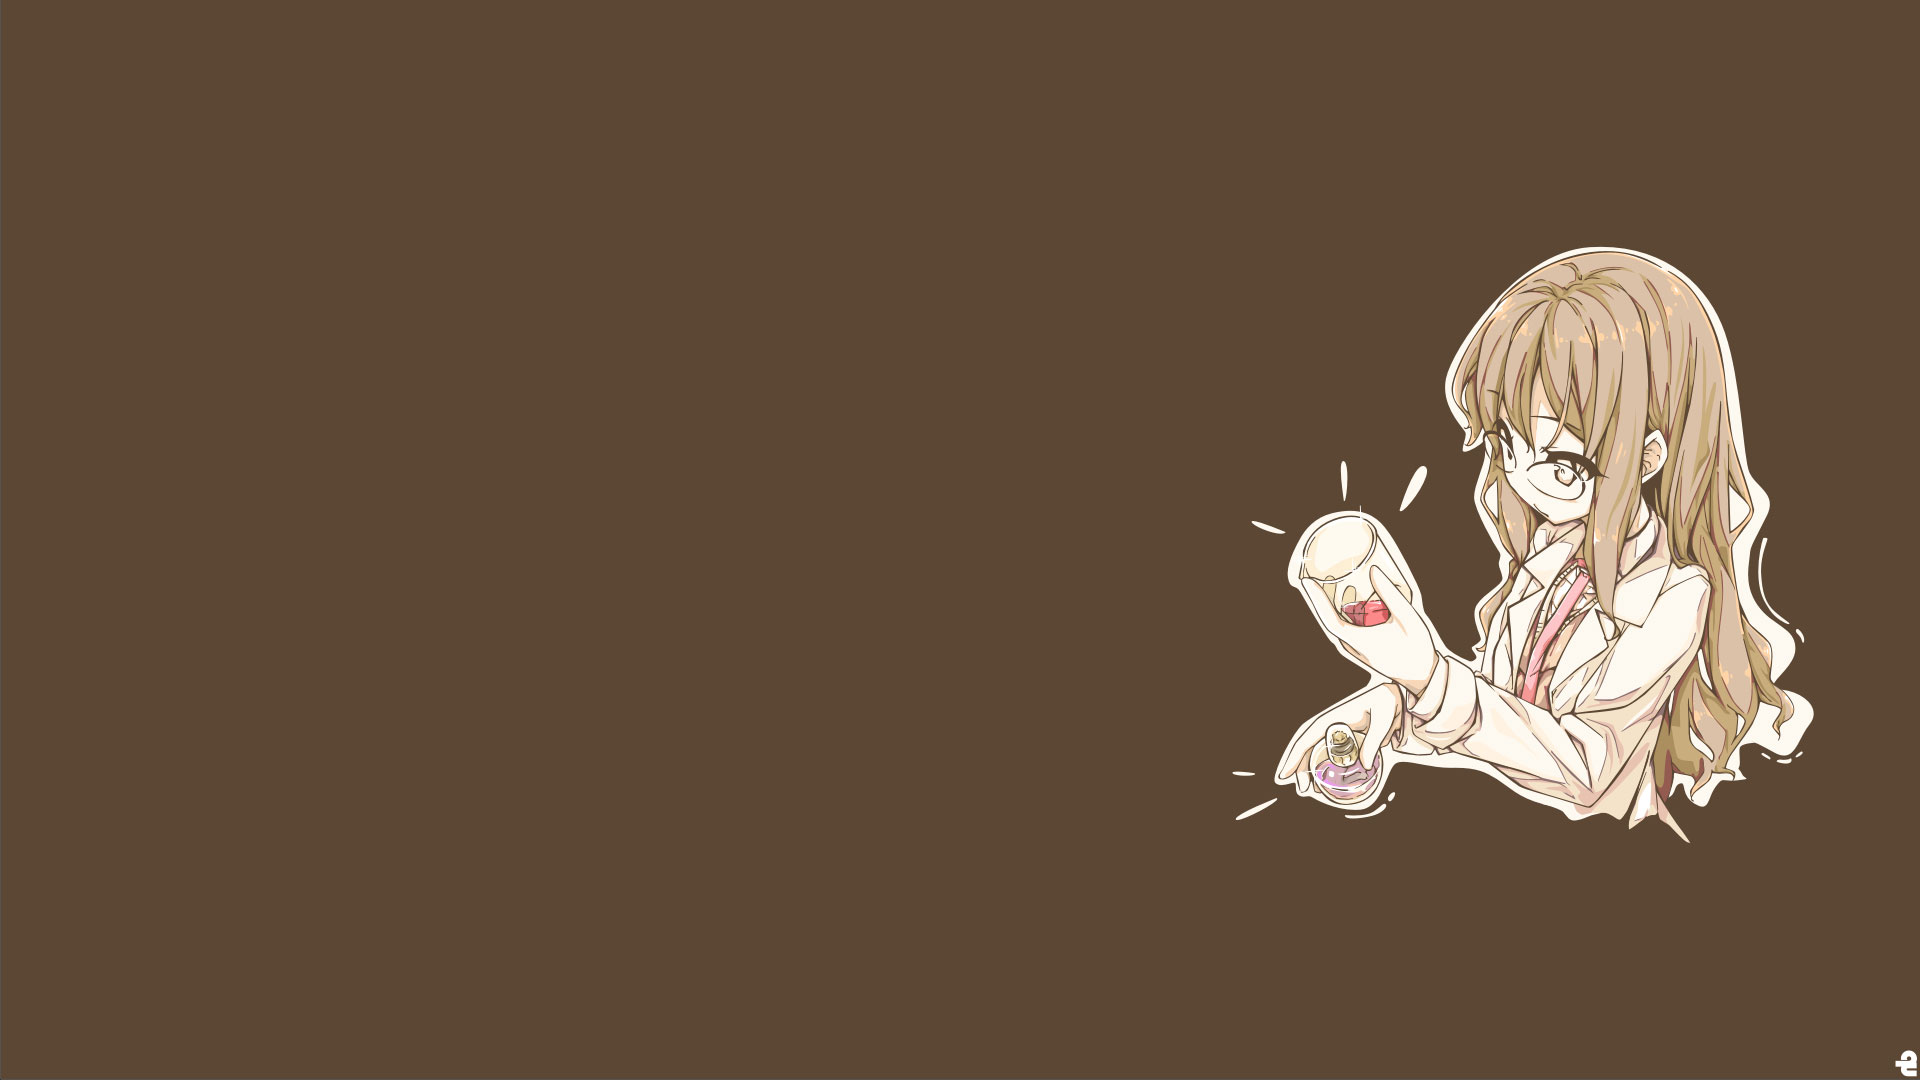 Wallpaper Anime, Rascal Does Not Dream Of Bunny Girl Senpai